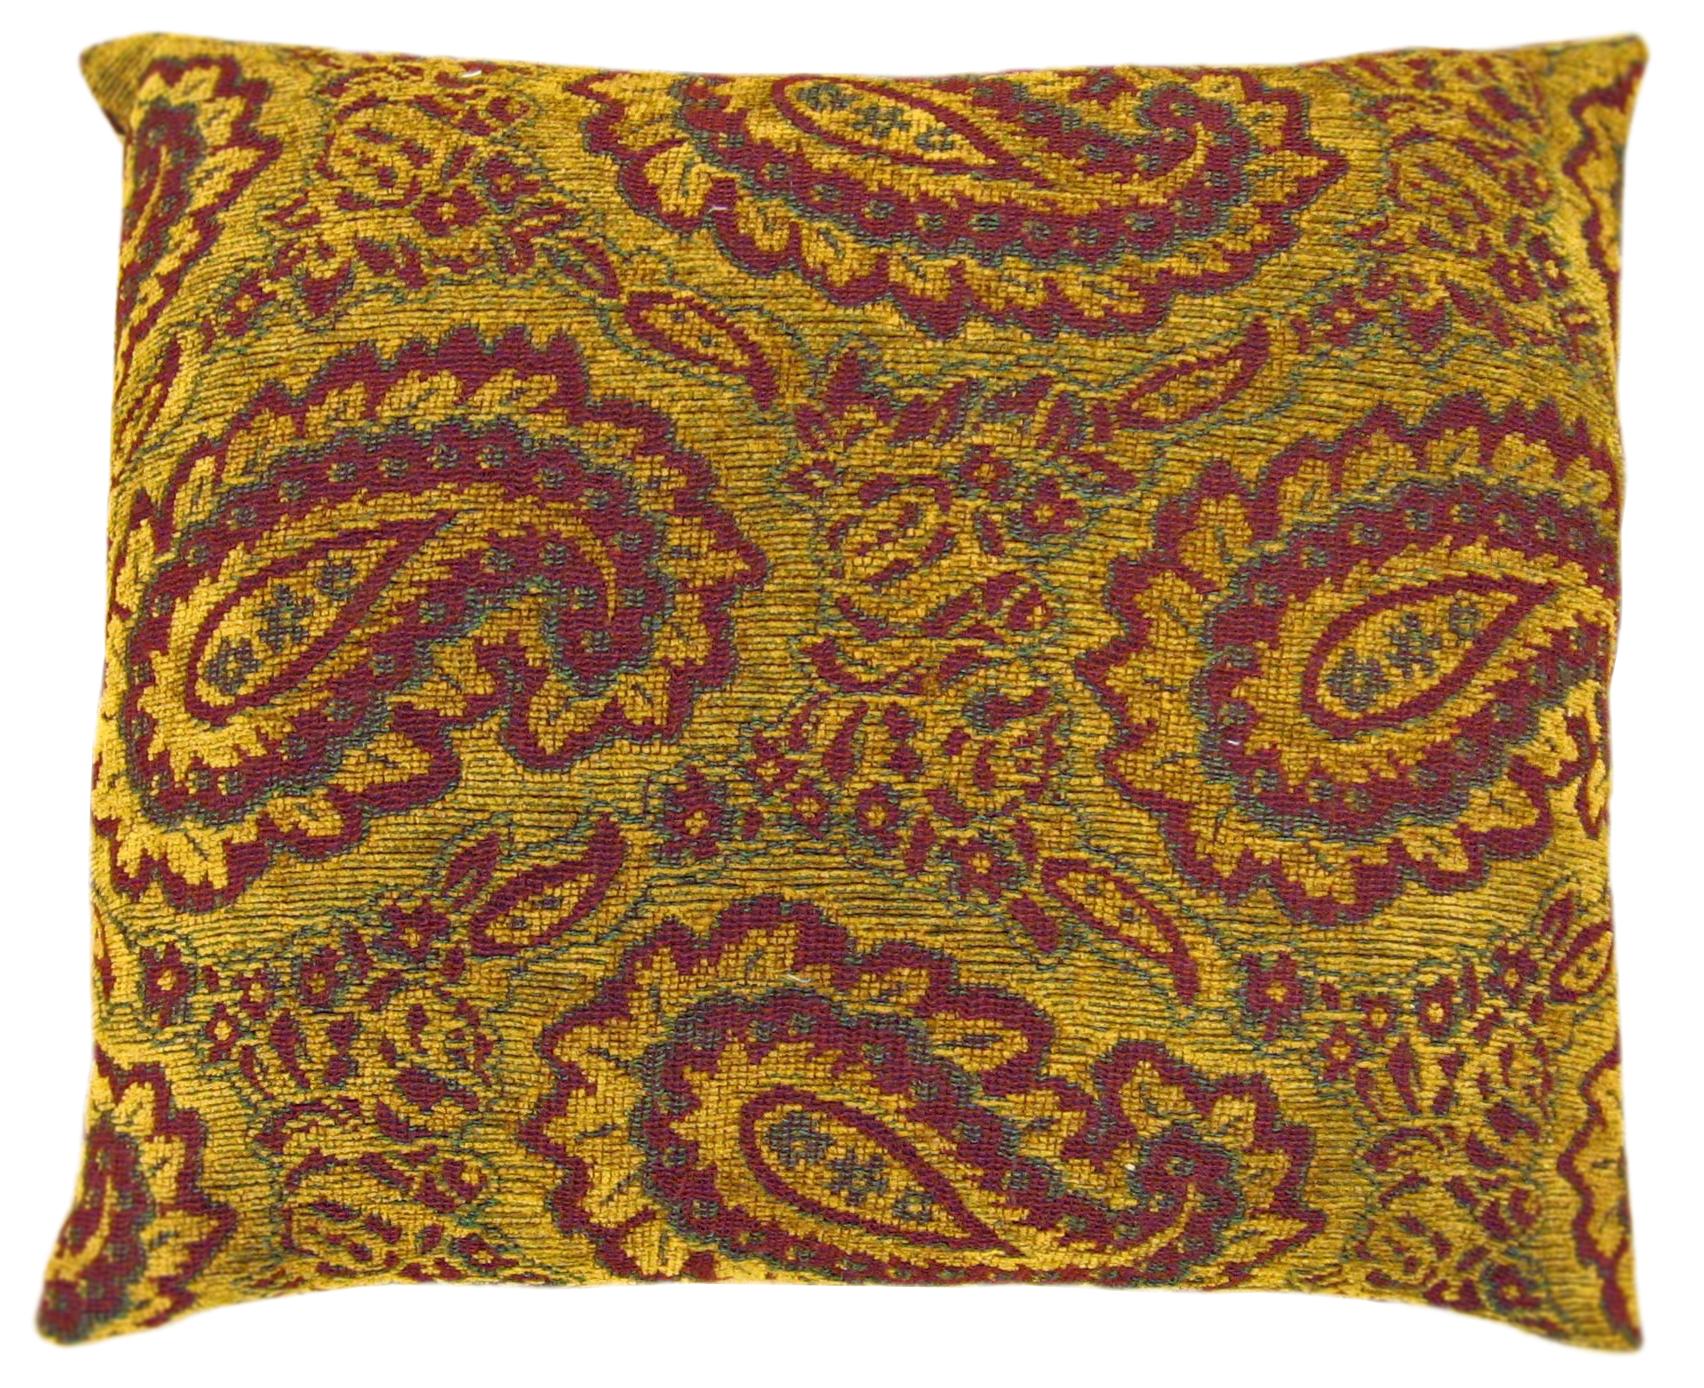 Vintage decorative pillow with large paisley design, size 22